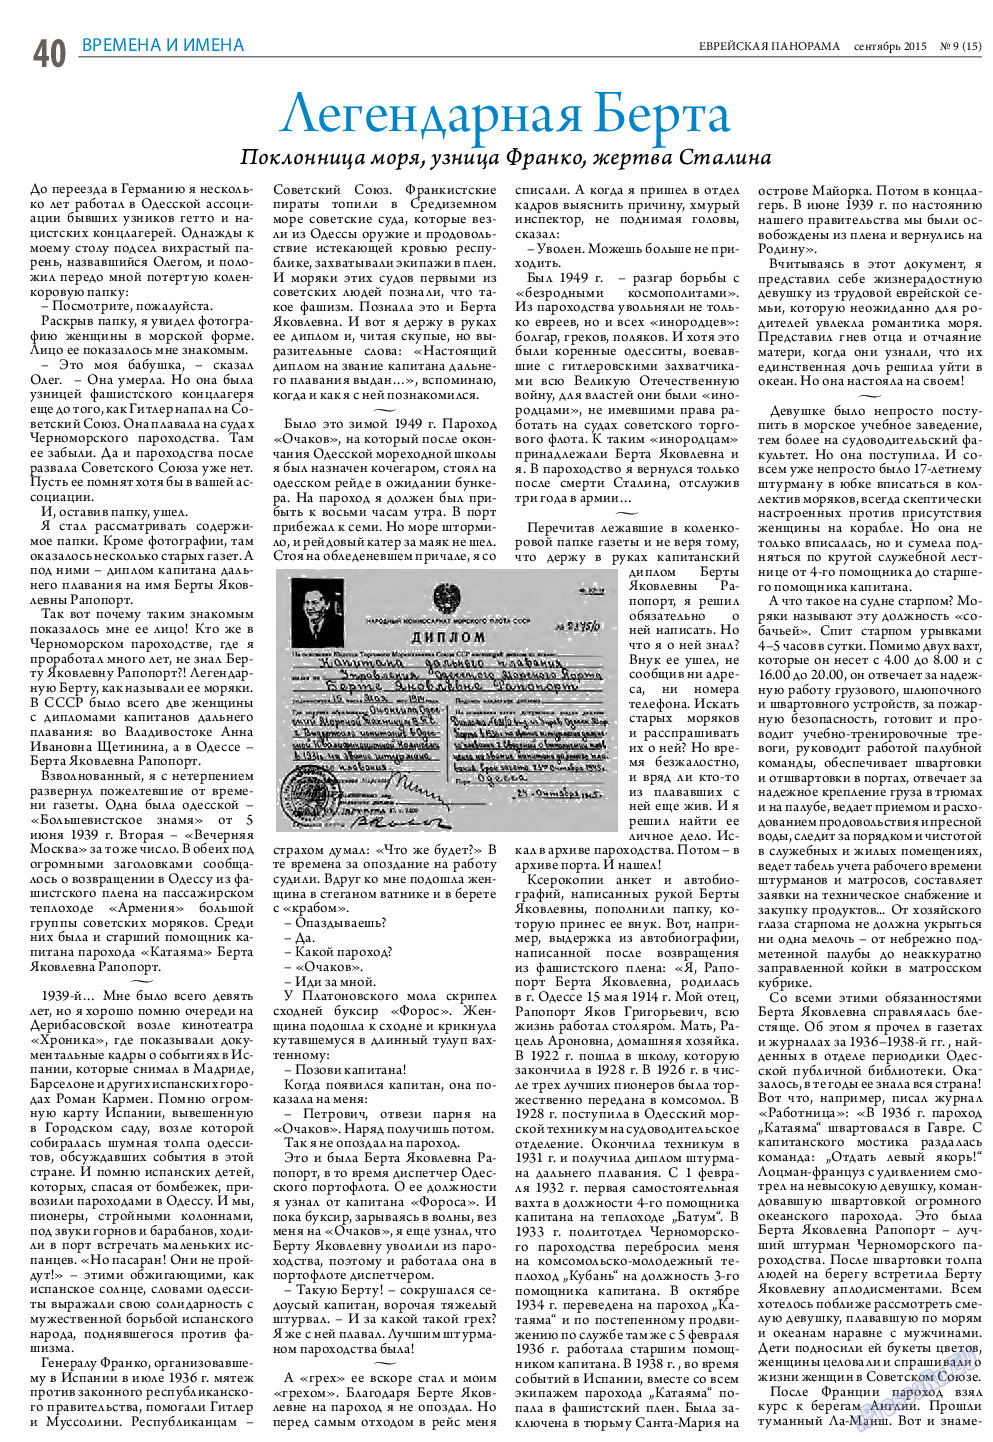 Еврейская панорама, газета. 2015 №9 стр.40